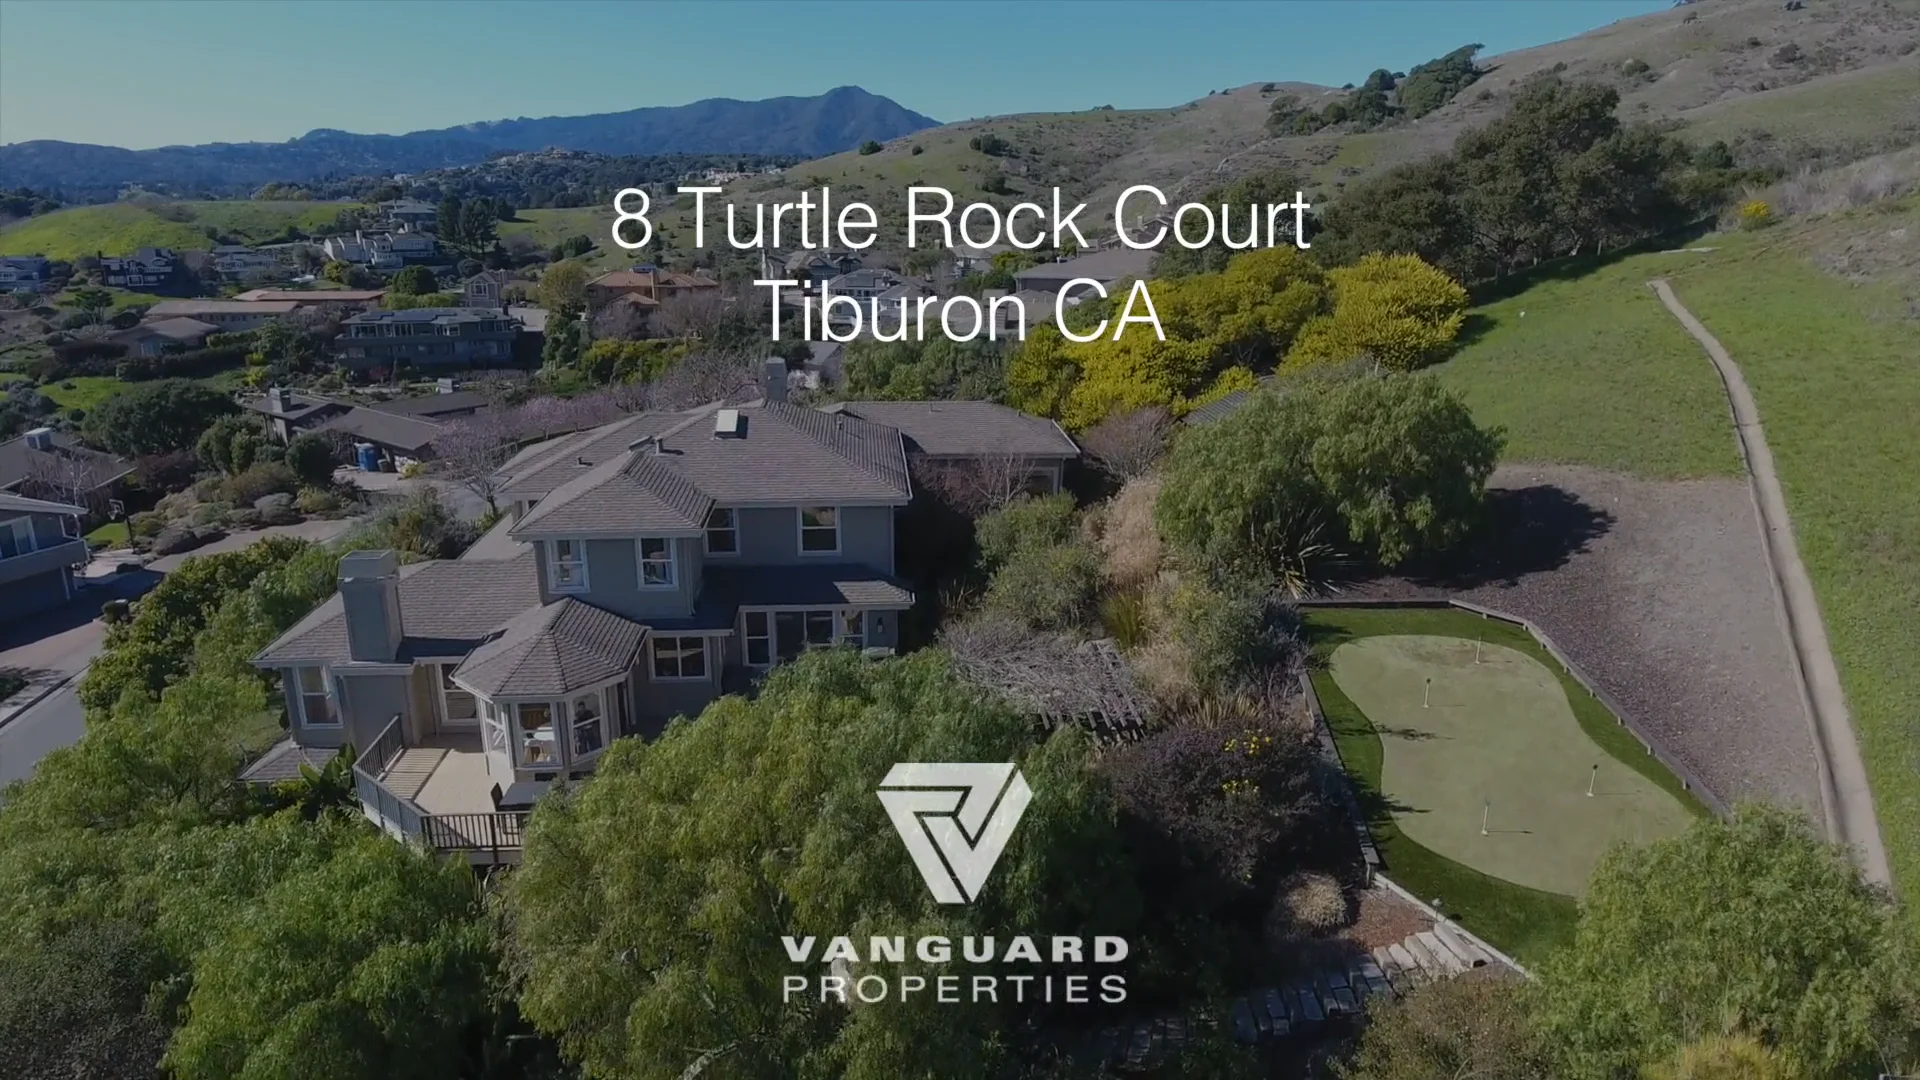 8 Turtle Rock Court Tiburon CA on Vimeo